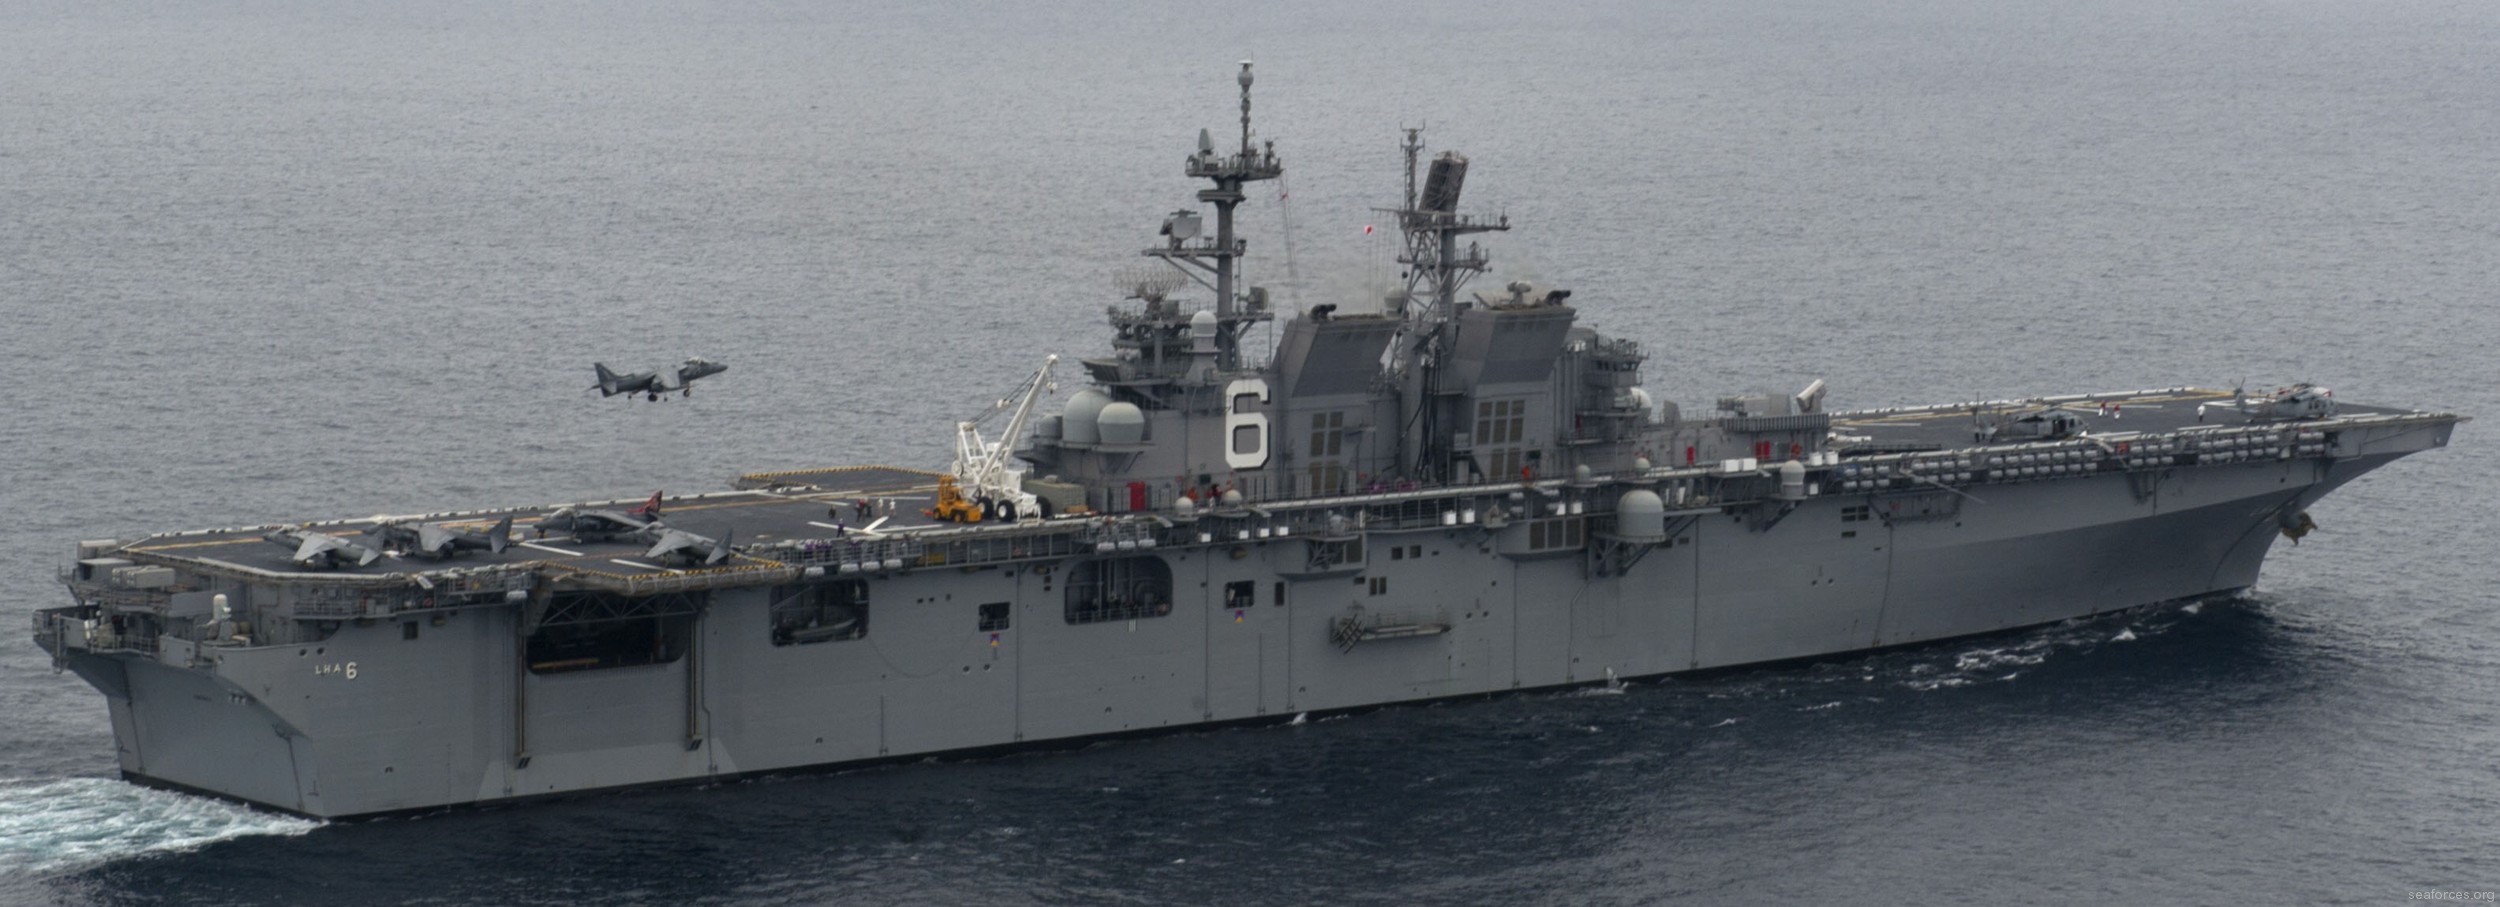 lha-6 uss america amphibious assault ship us navy 70